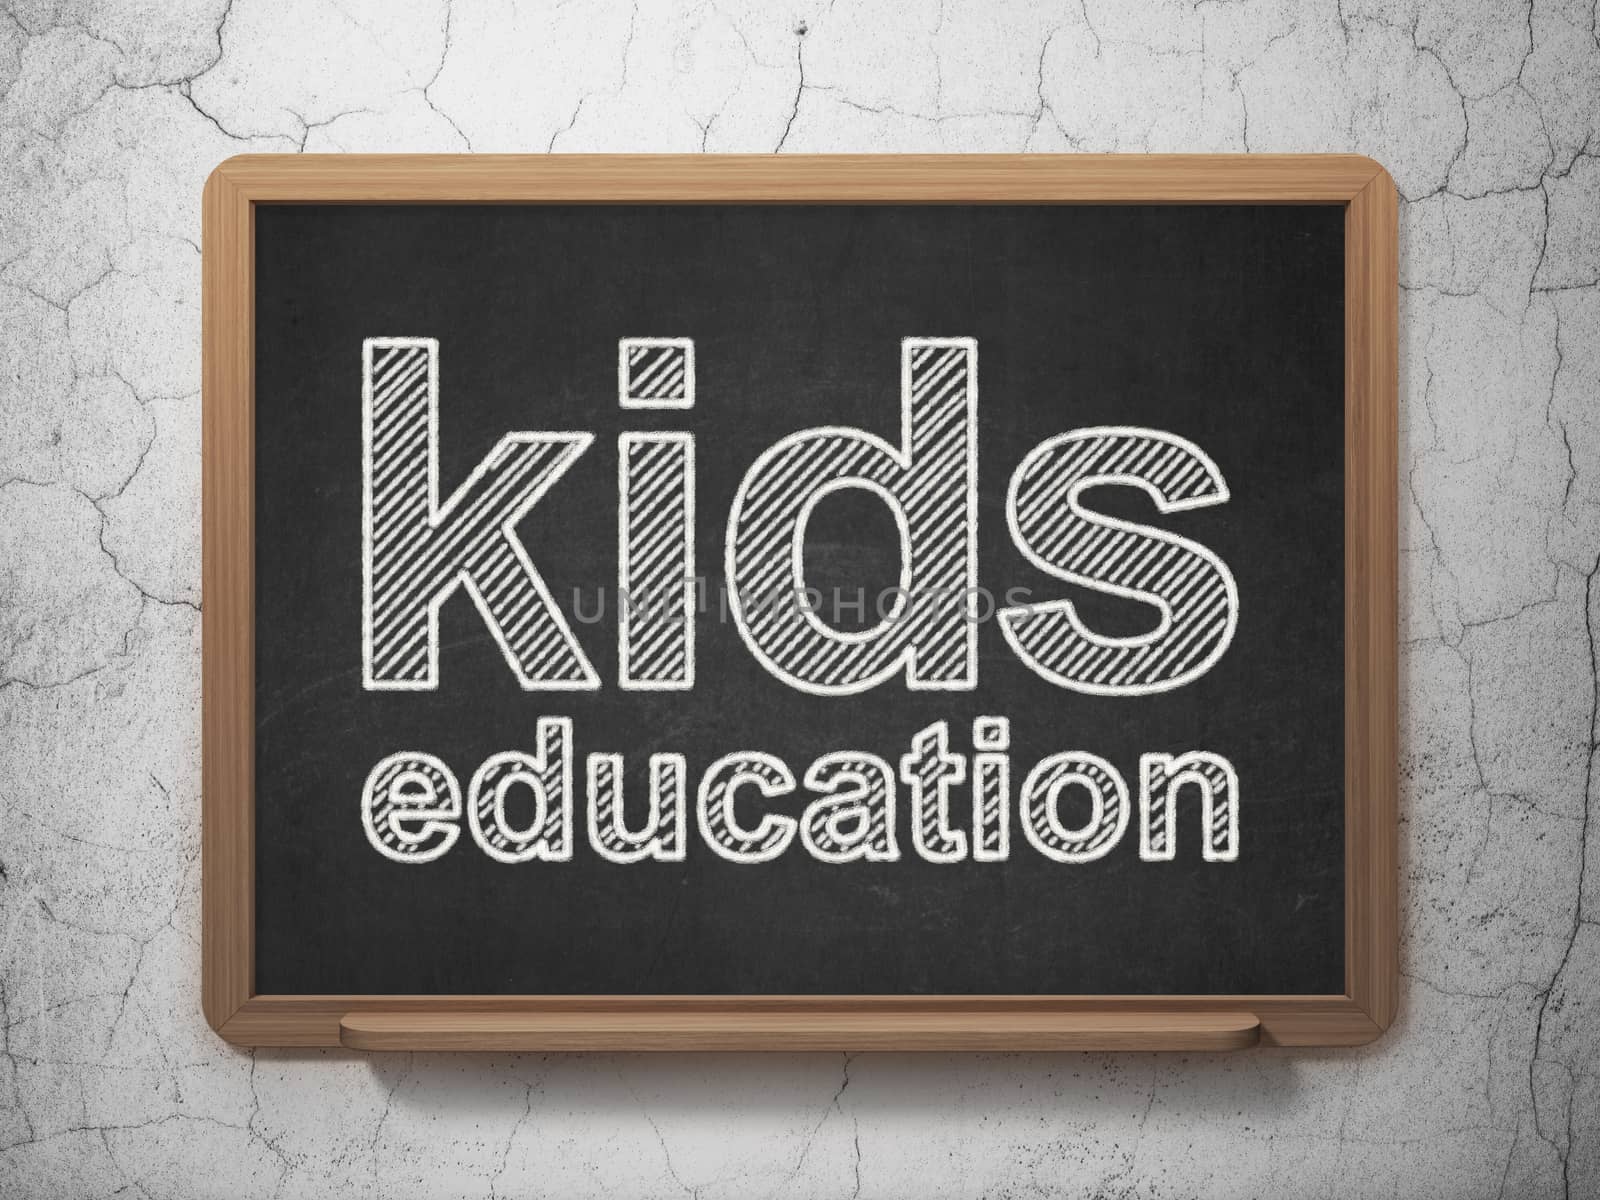 Studying concept: Kids Education on chalkboard background by maxkabakov